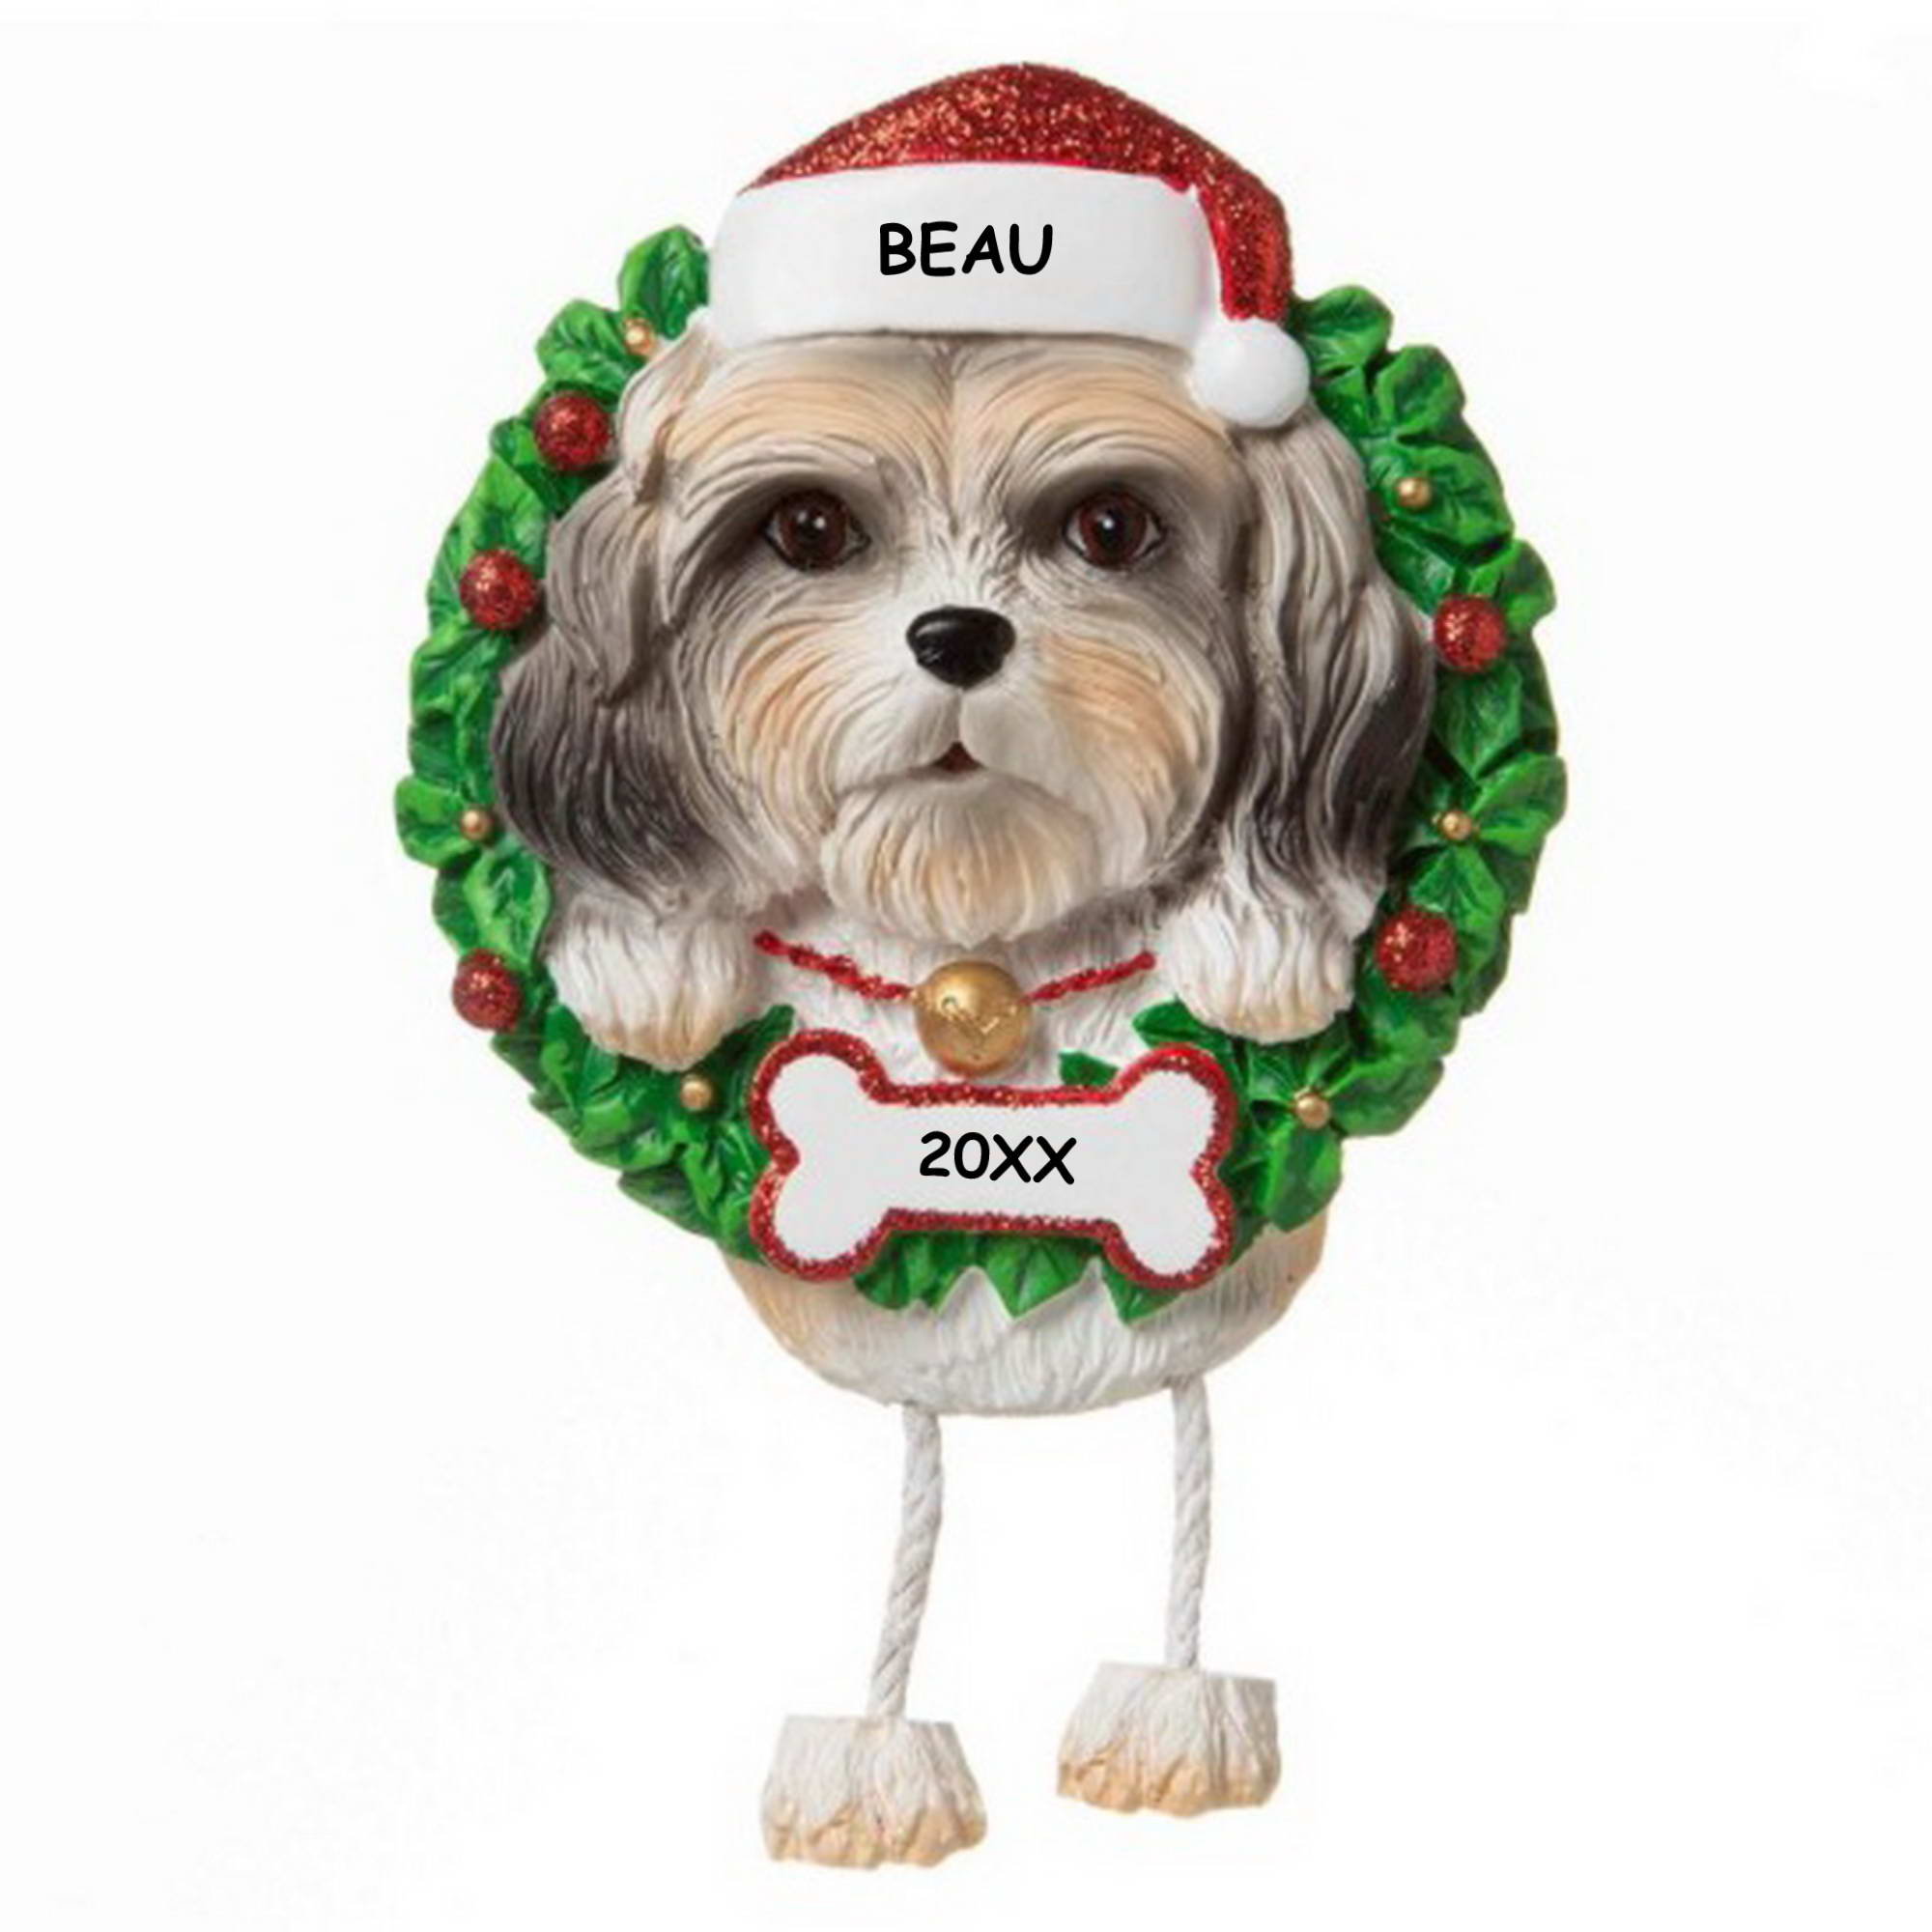 Personalized Pet Dog Christmas Ornament - Shih Tzu